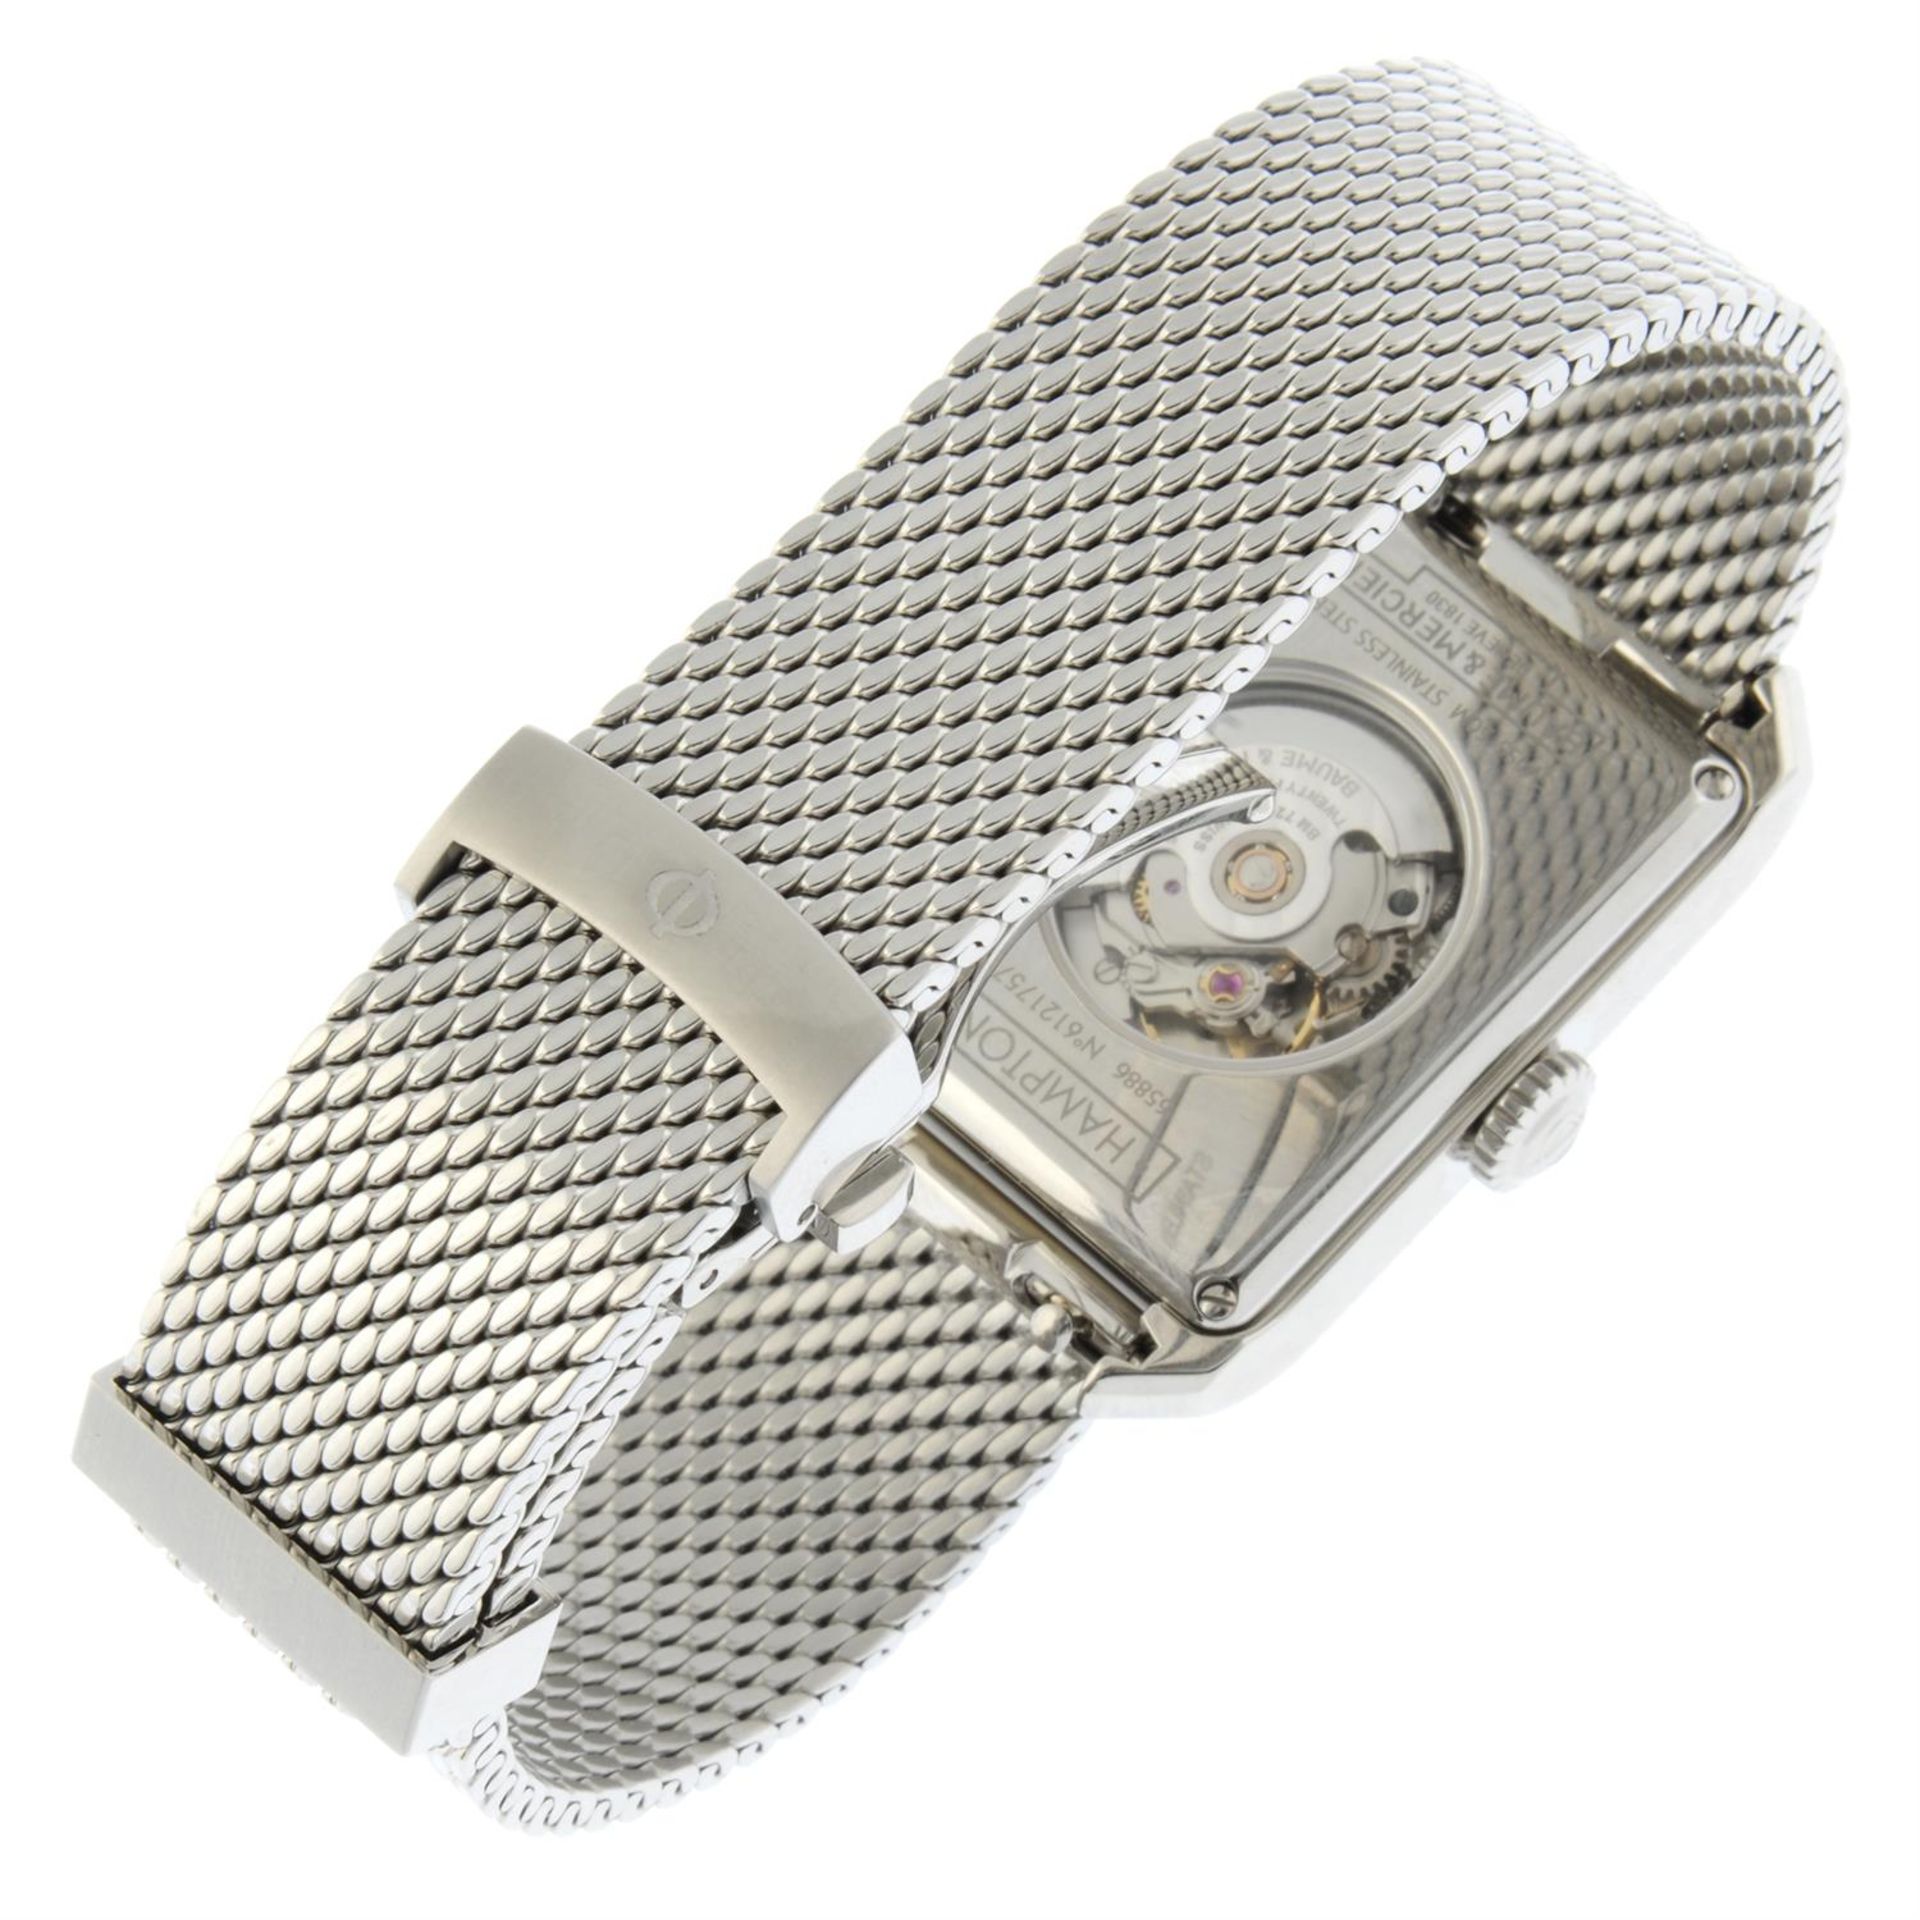 Baume & Mercier - a Hampton watch, 28x42mm, - Image 2 of 6